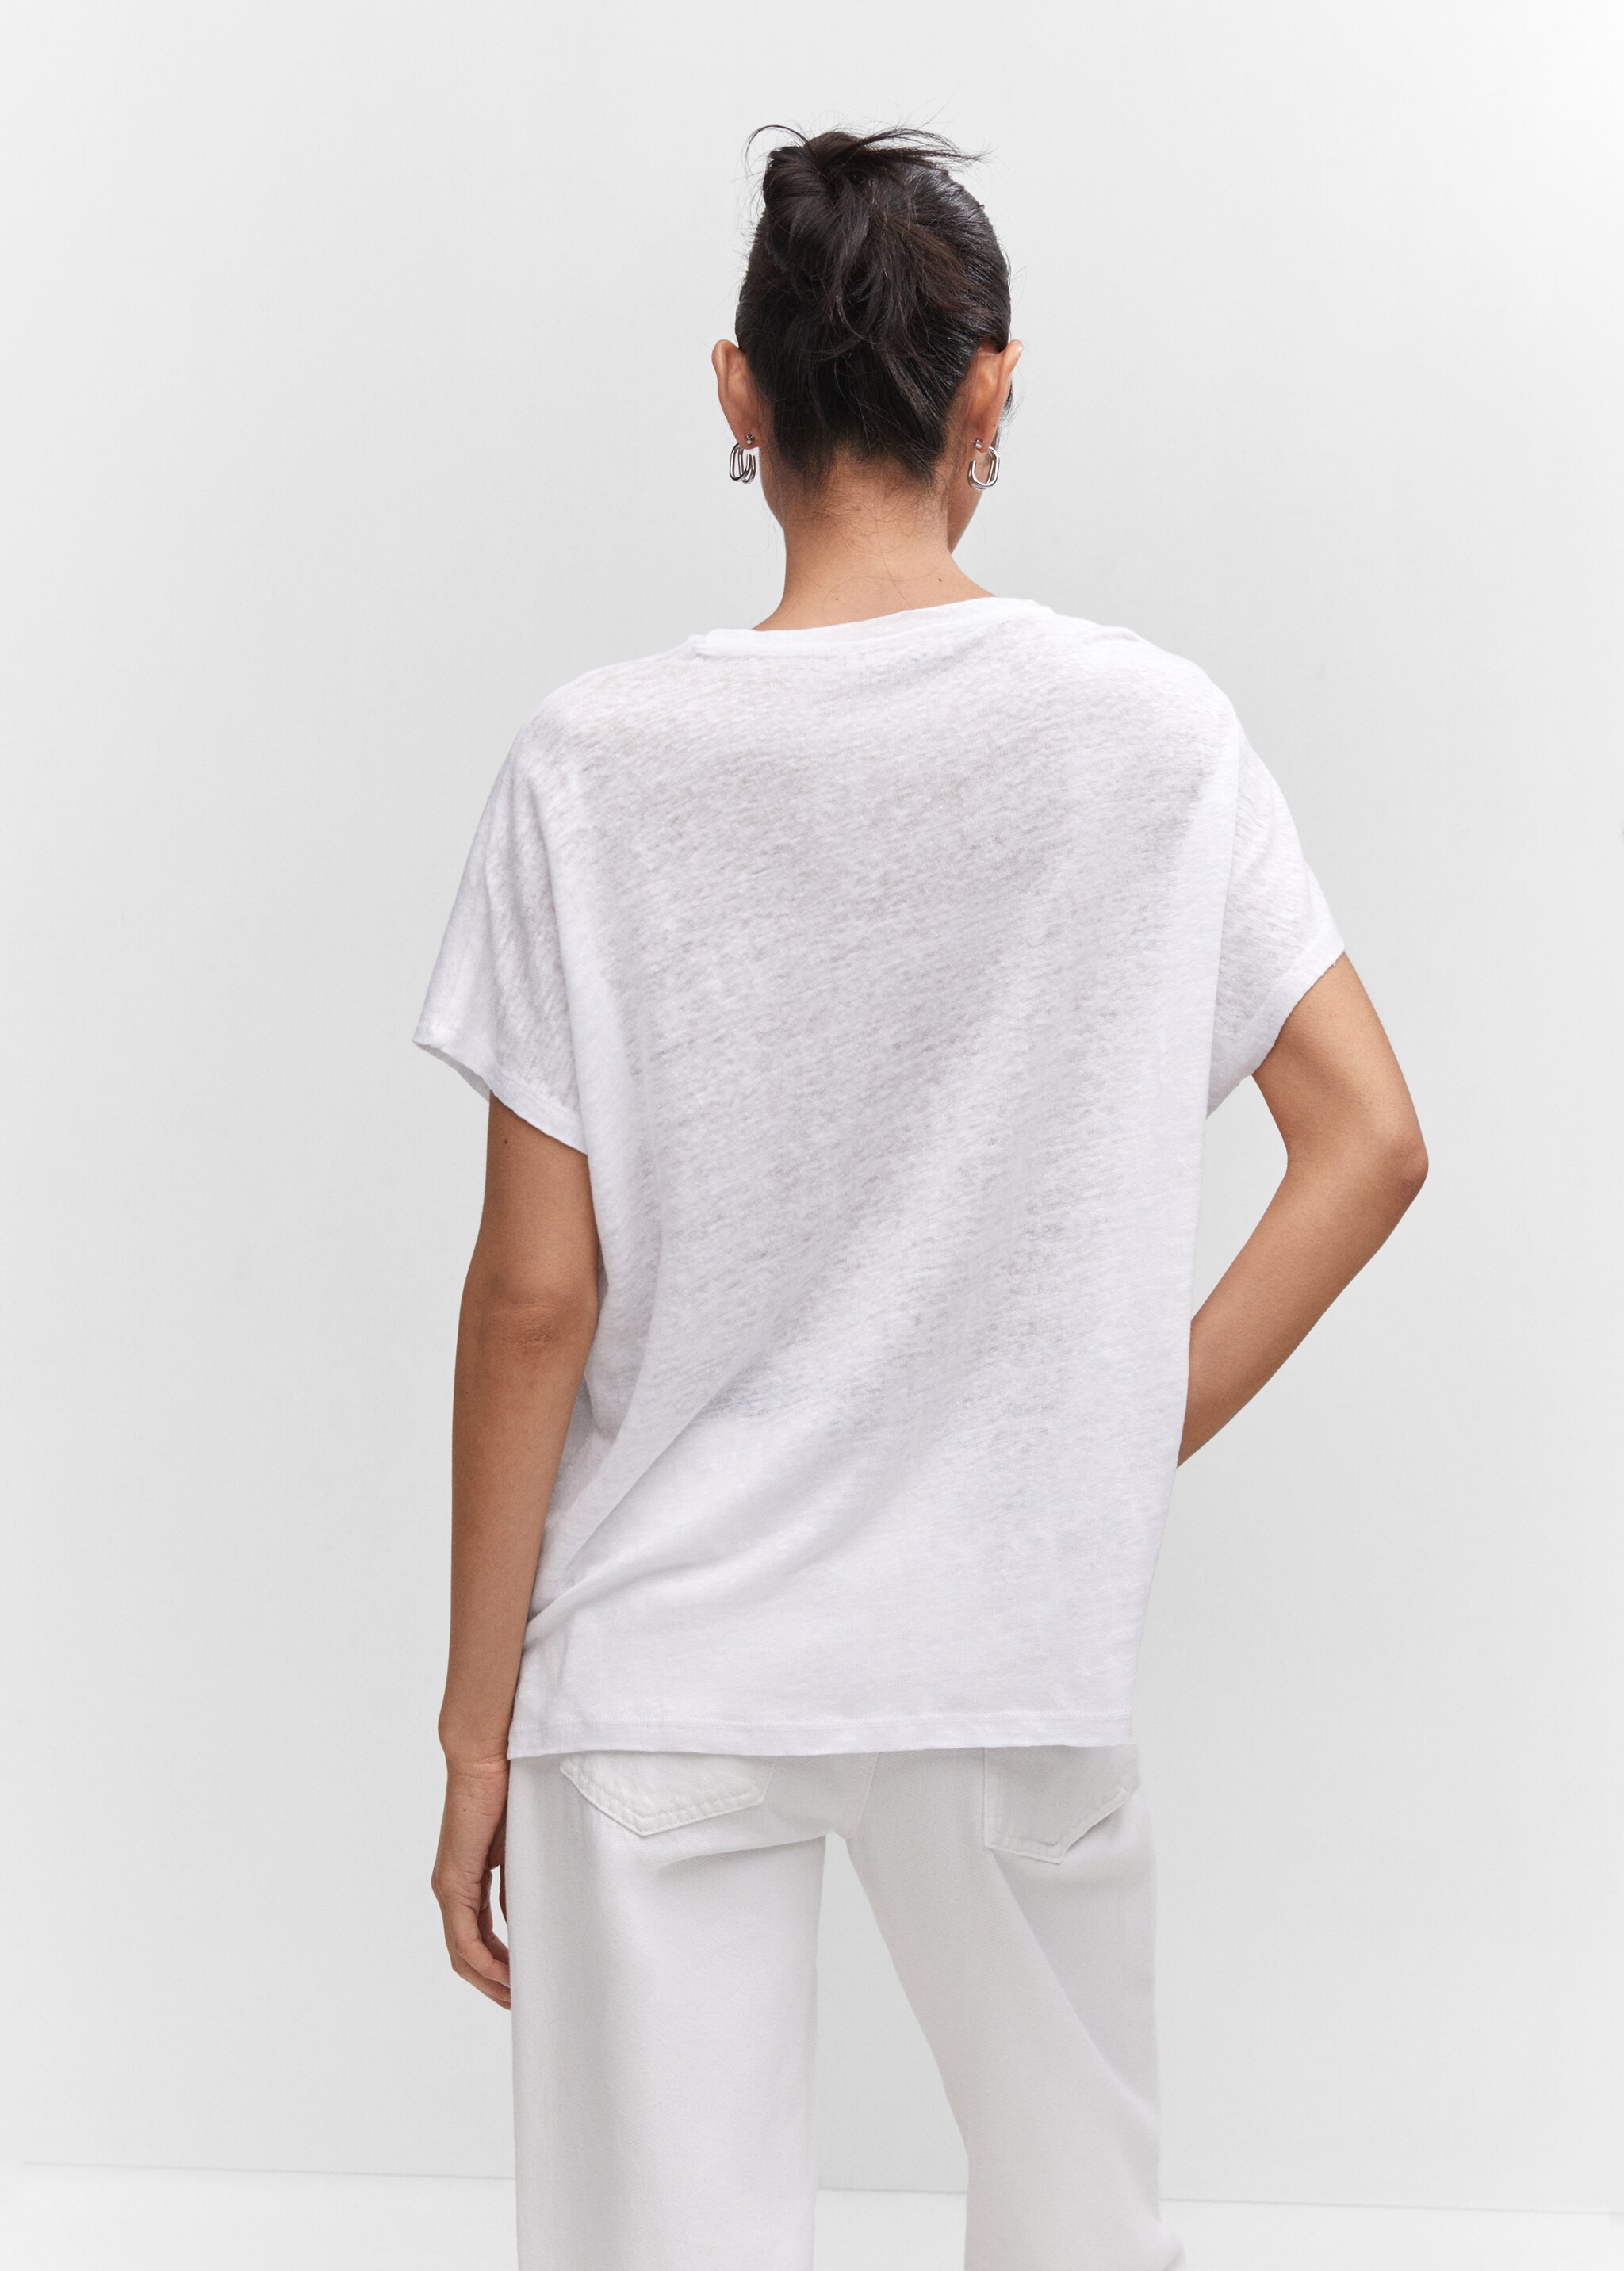 Camiseta lino oversize - Reverse of the article